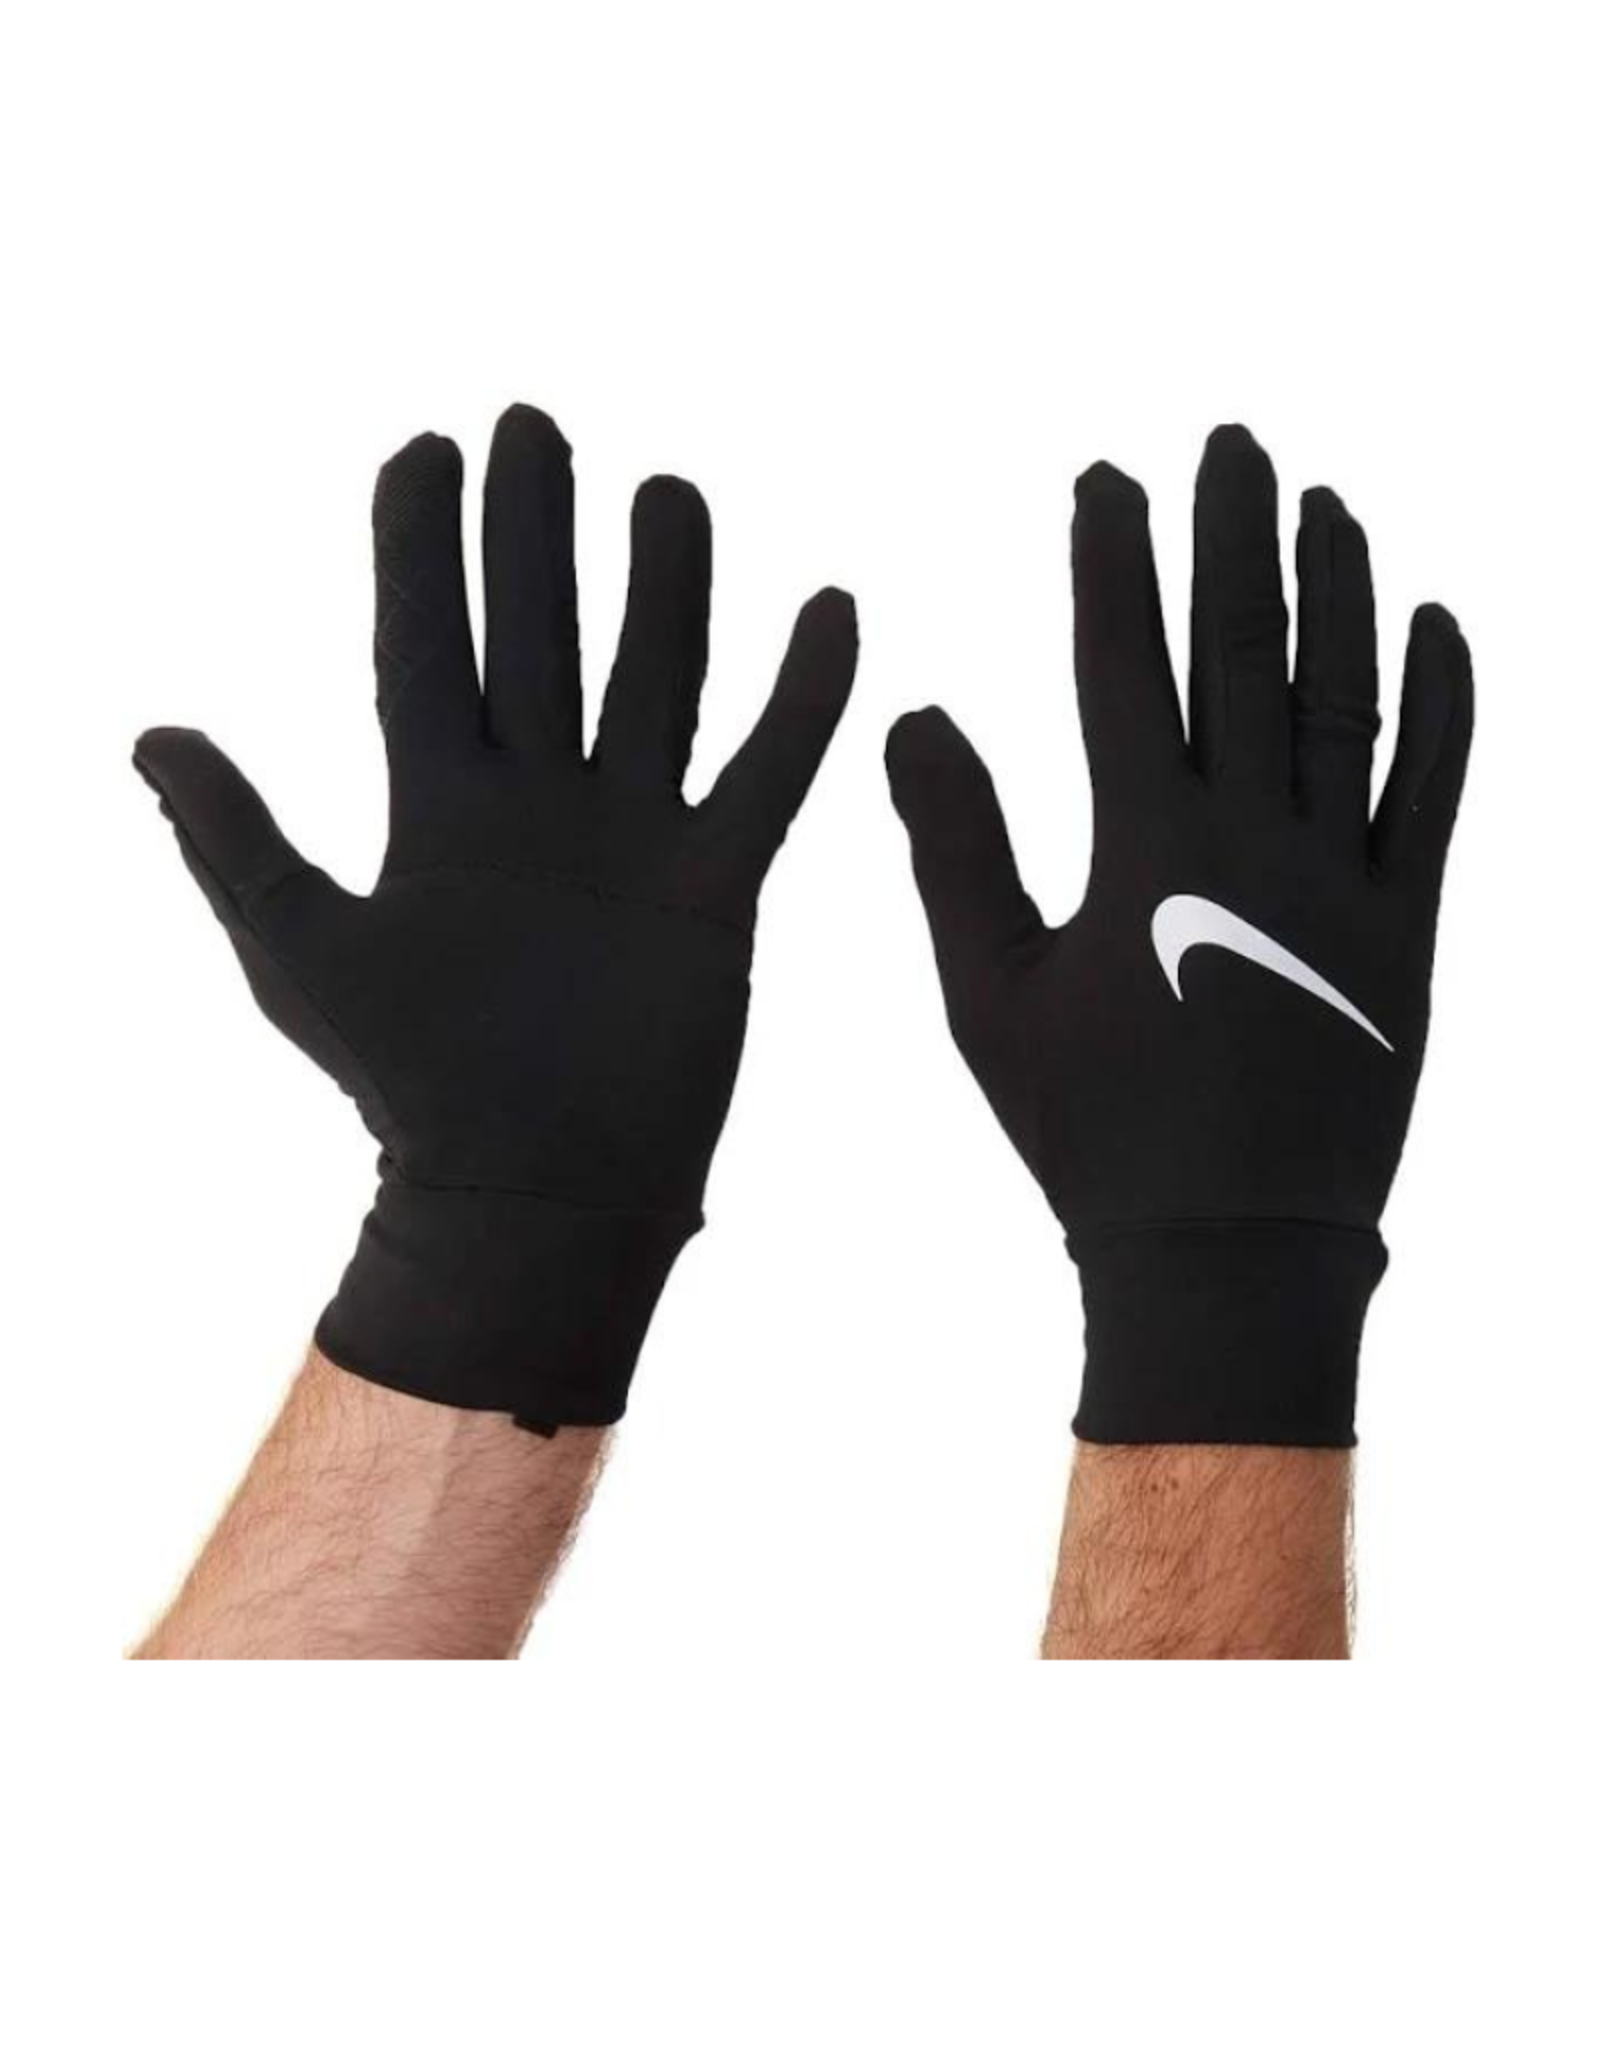 NIKE M Dri-FIT Lightweight Gloves